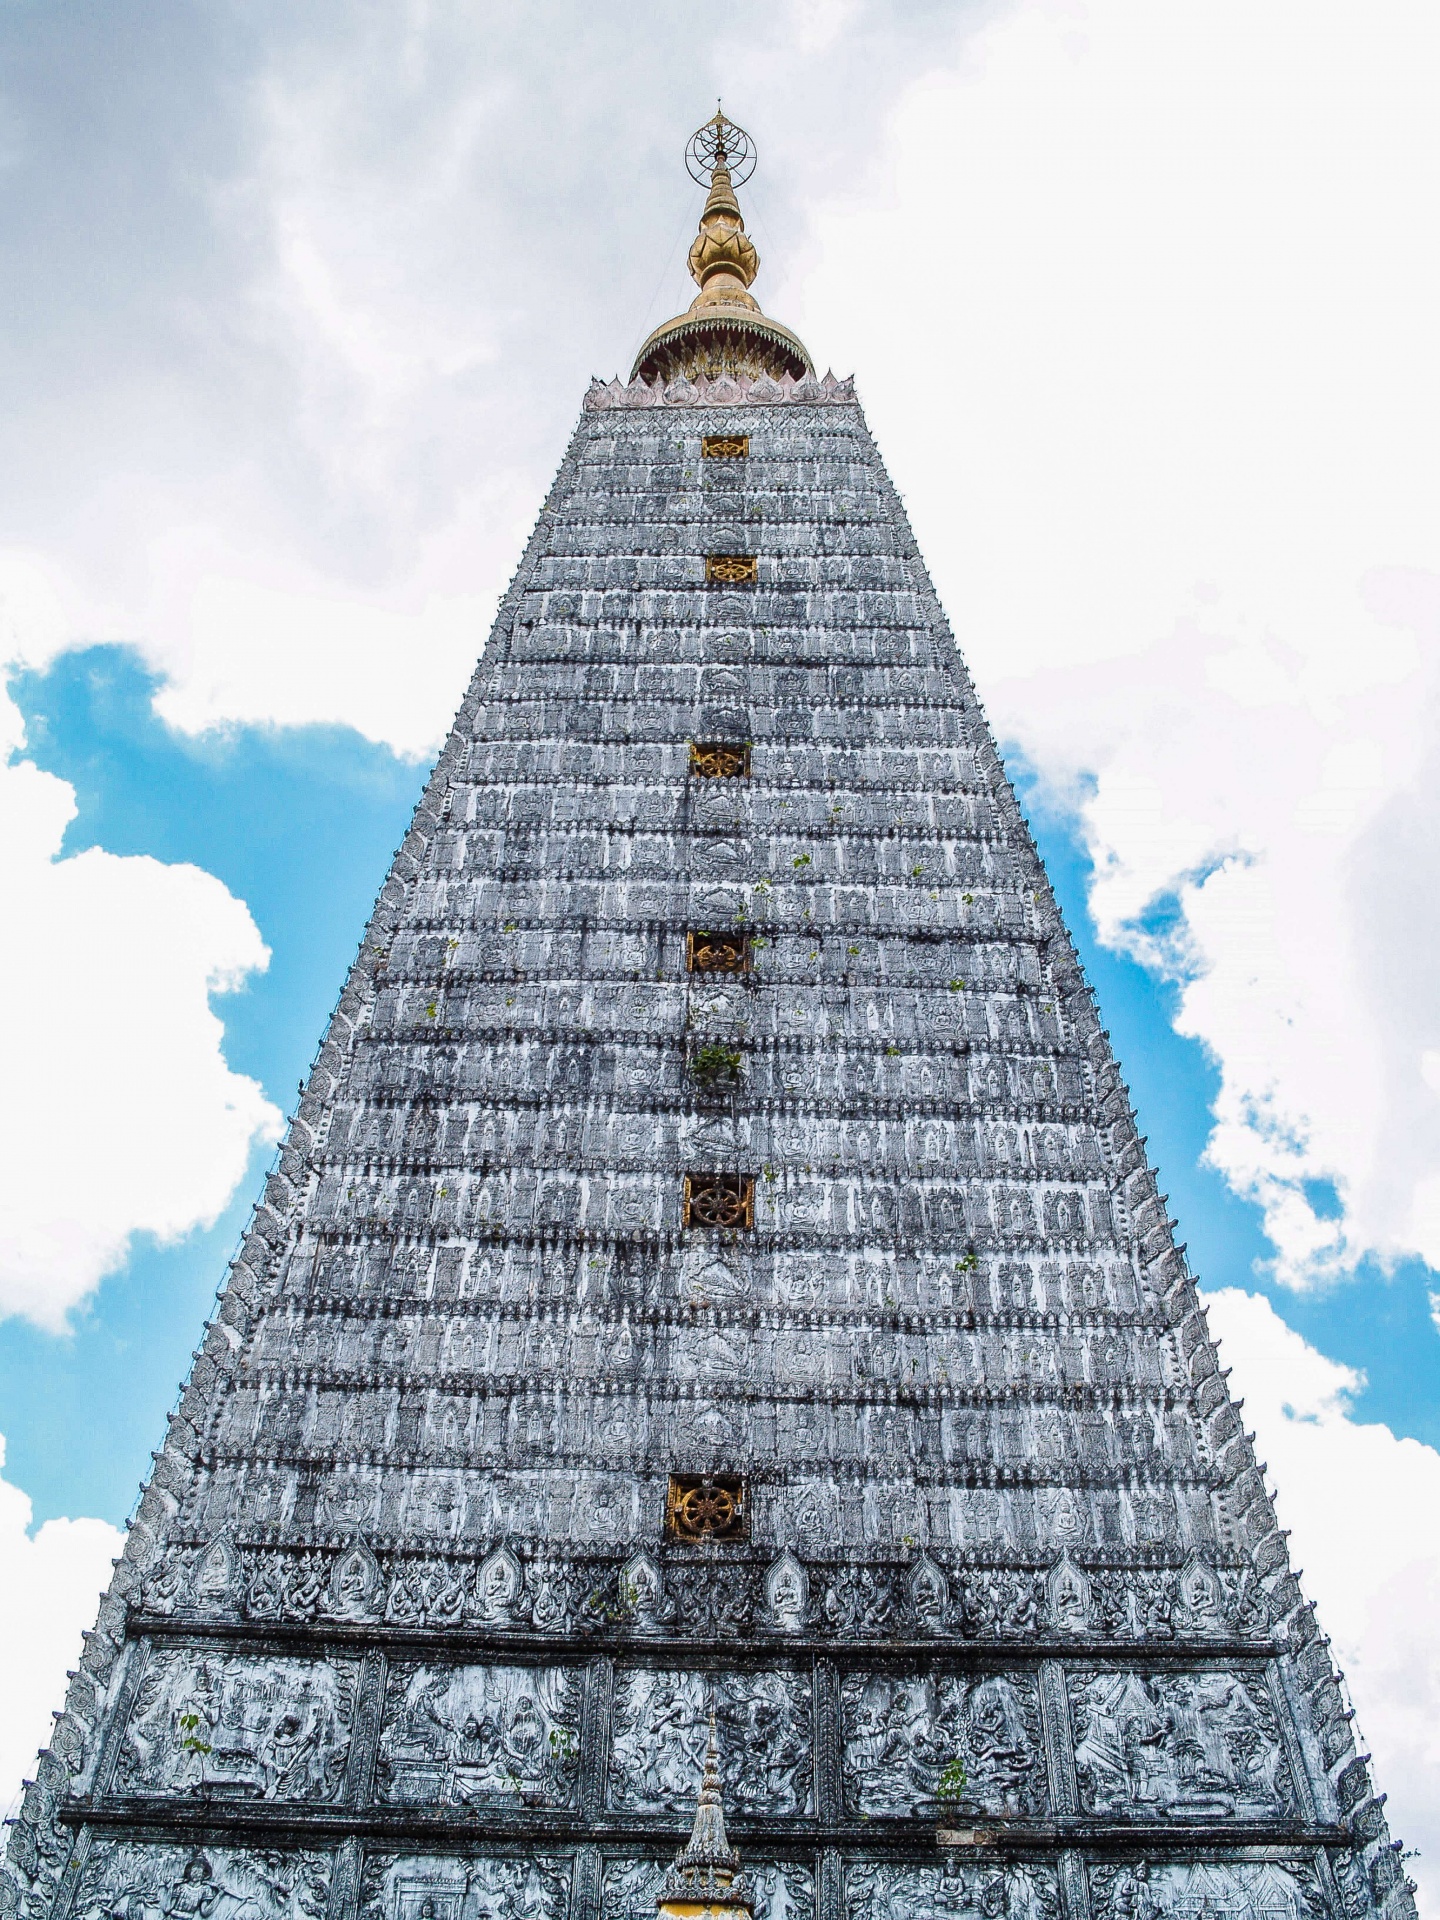 Wat Phra That Nong Bua Temple